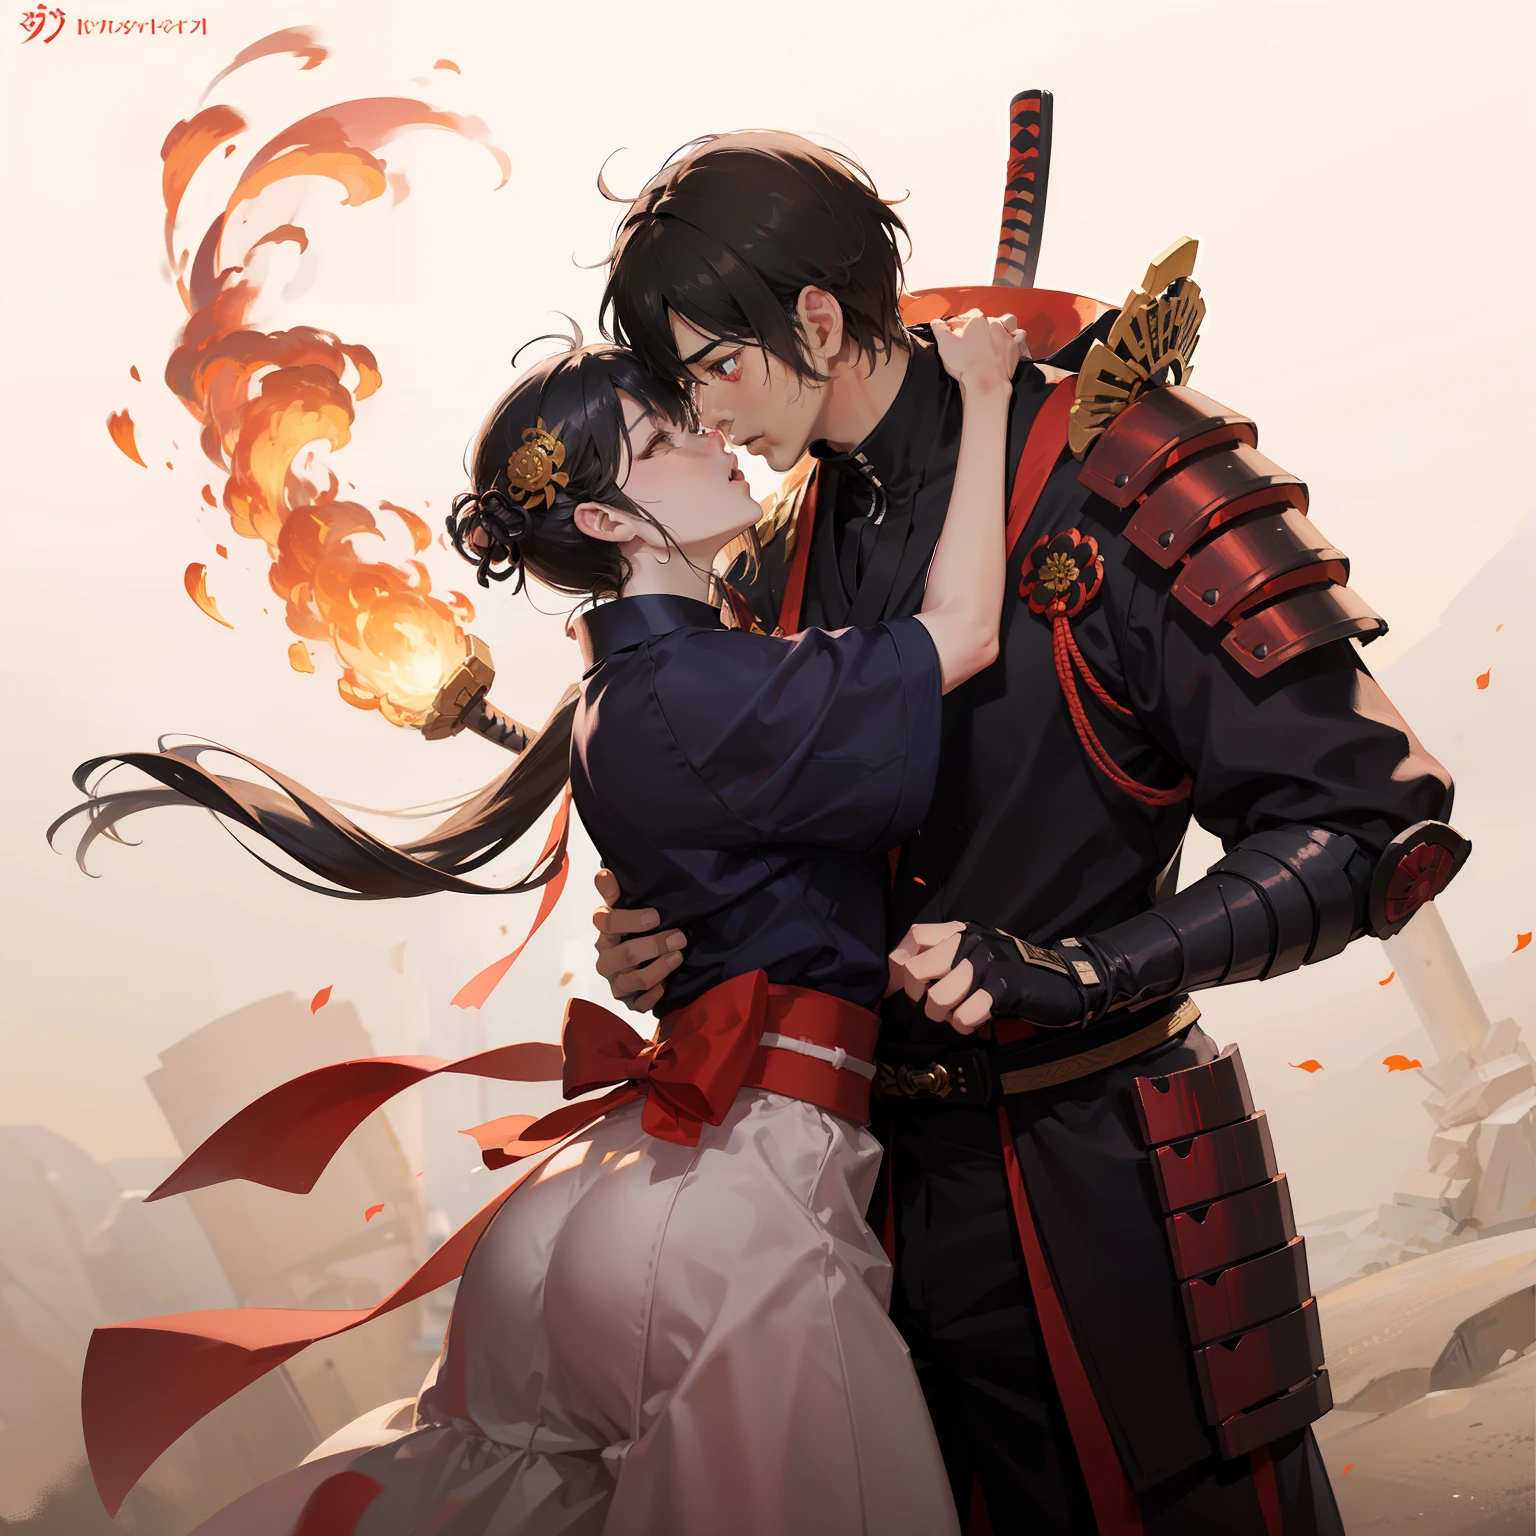 una pareja, Oda a Nobunaga, hombre samurái, traje samurái, armadura samurái,Nohime pelo largo negro, abrazo, fondo en llamas, El fondo es un templo.,Amor caliente